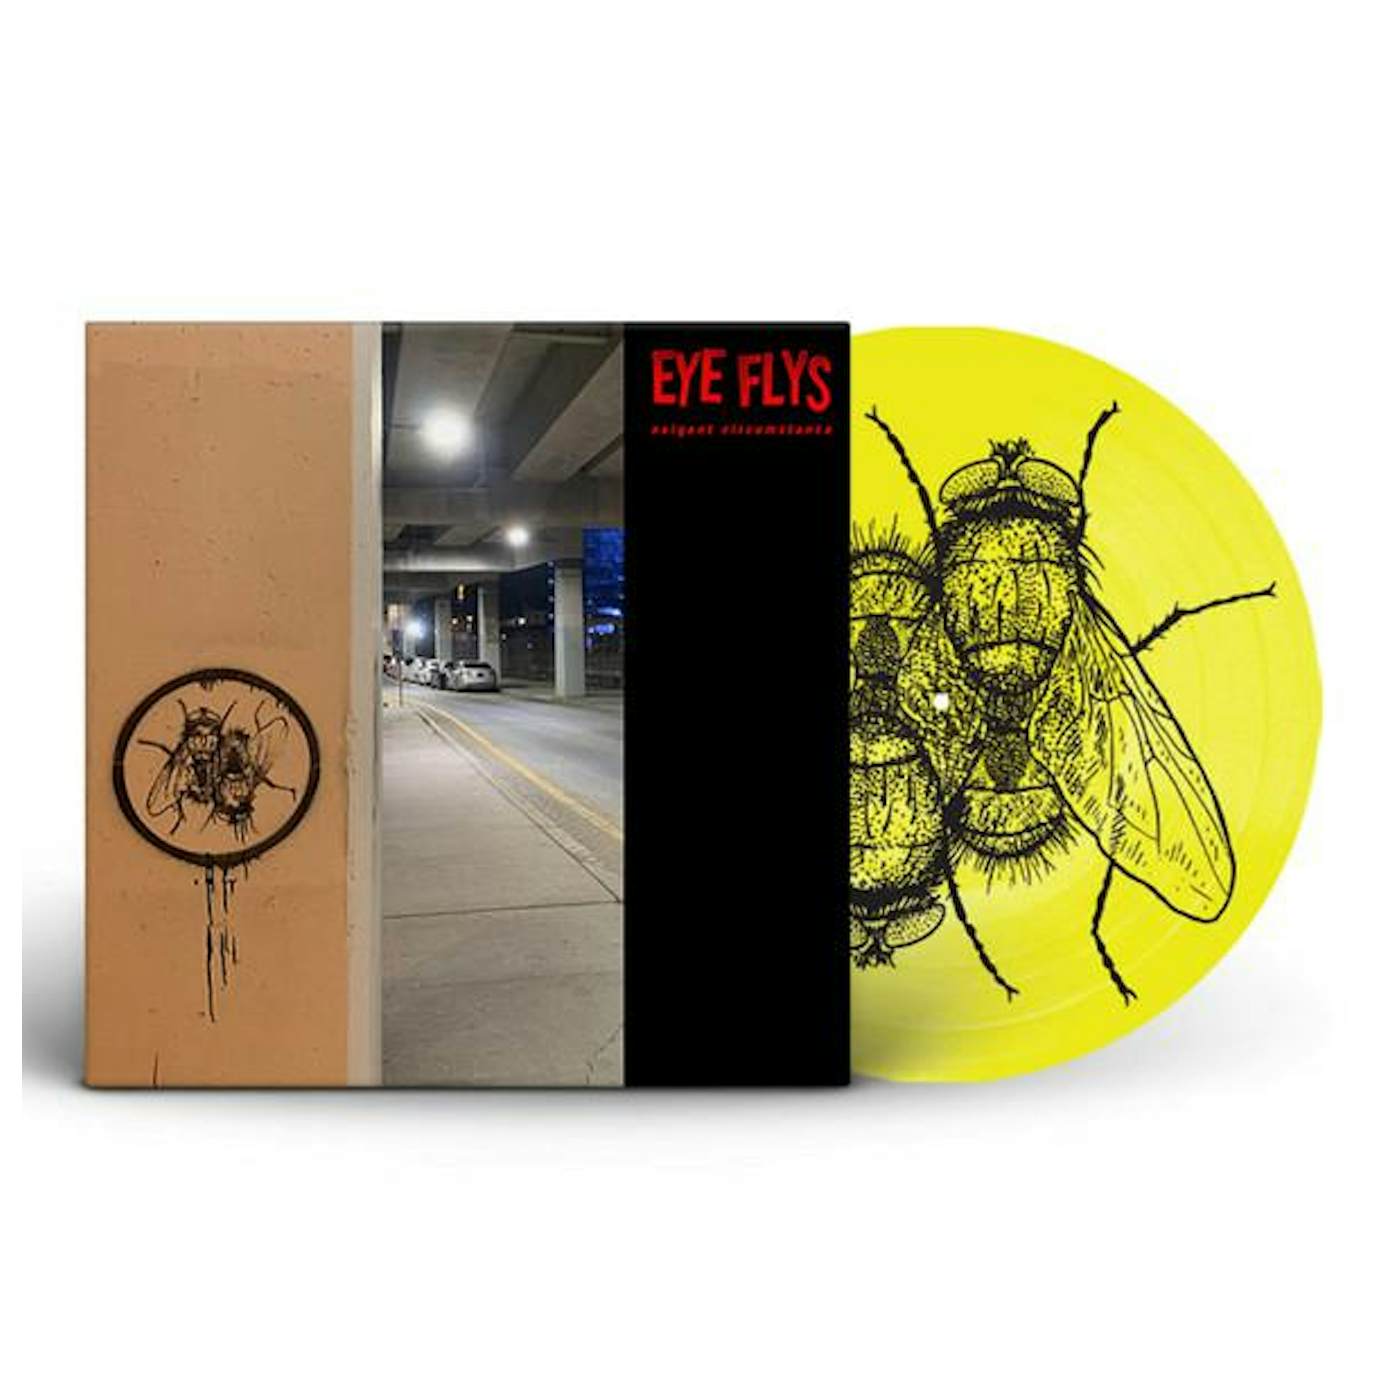 Eye Flys EXIGENT CIRCUMSTANCE Vinyl Record